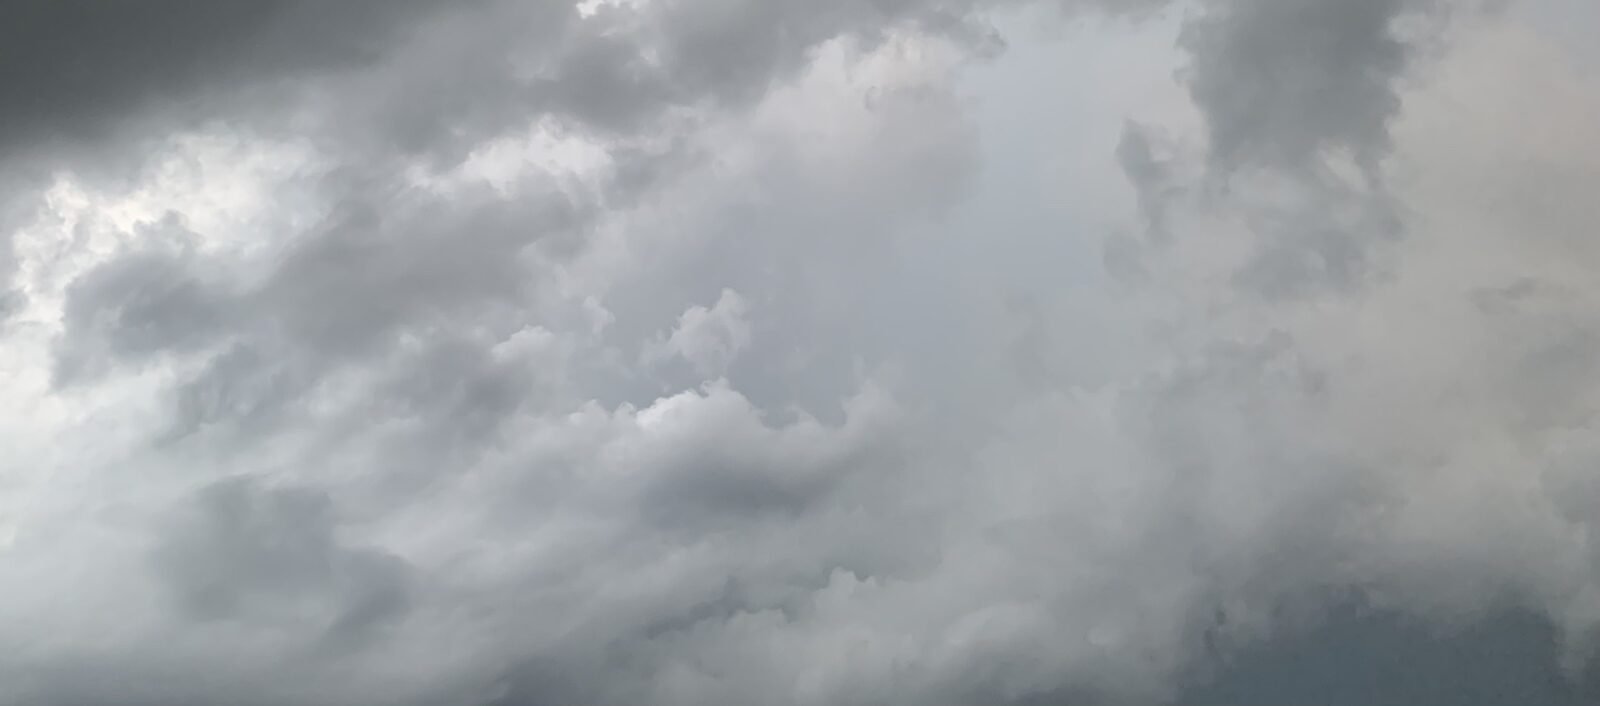 Погода в Запорожье 5 августа: облачно с прояснениями